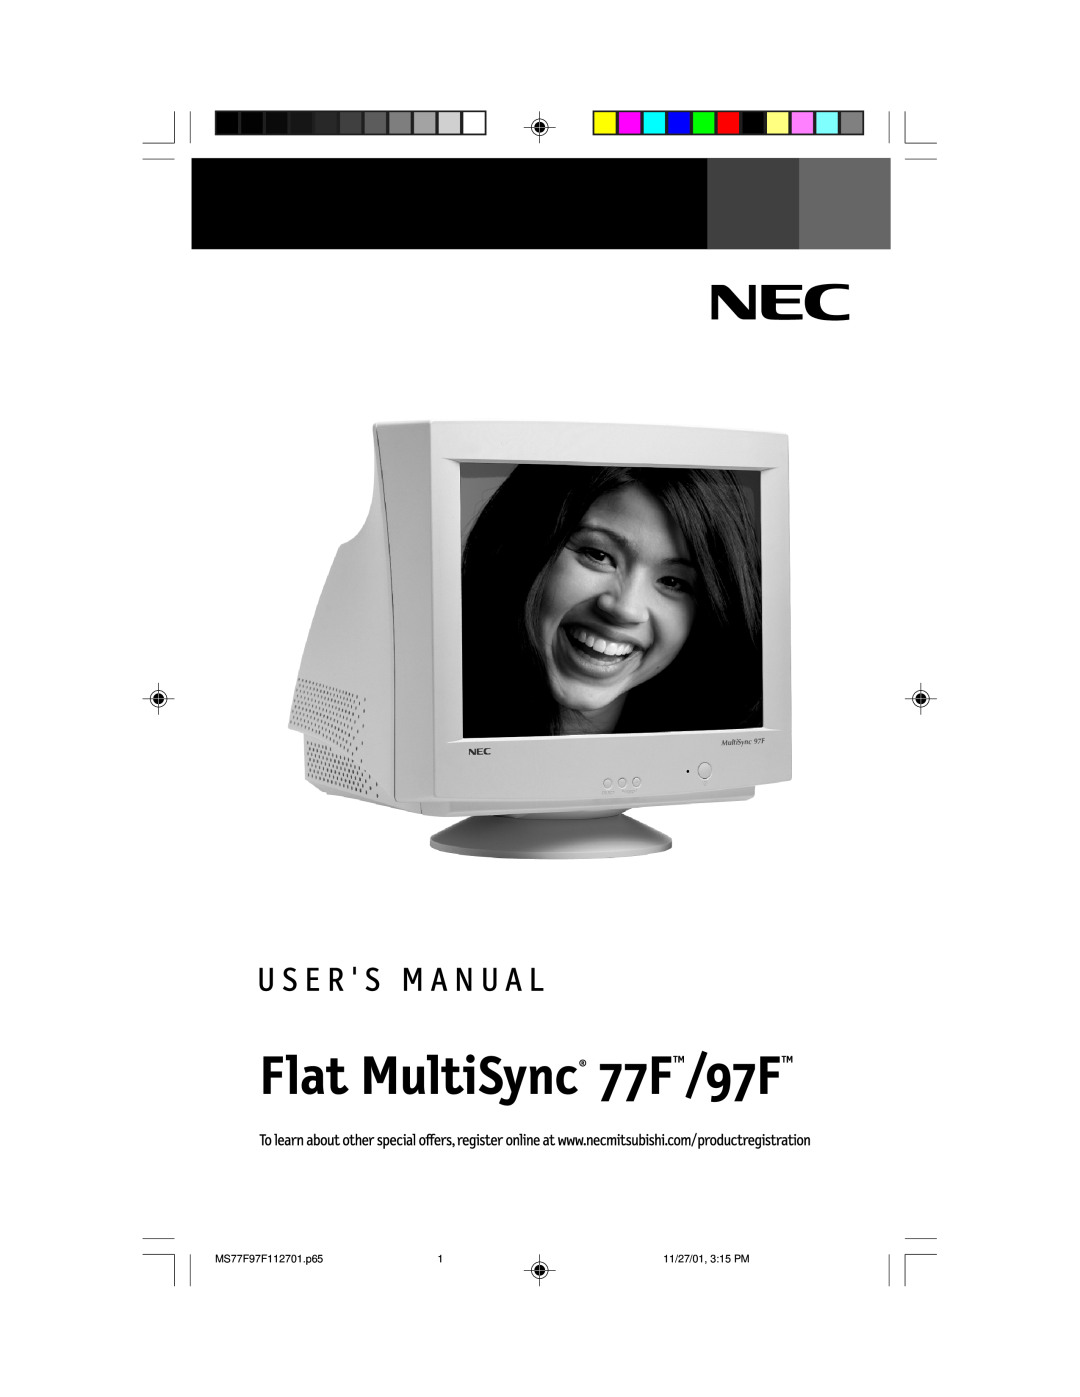 NEC manual Flat MultiSync 77FTM/97FTM, MS77F97F112701.p65, 11/27/01, 315 PM 